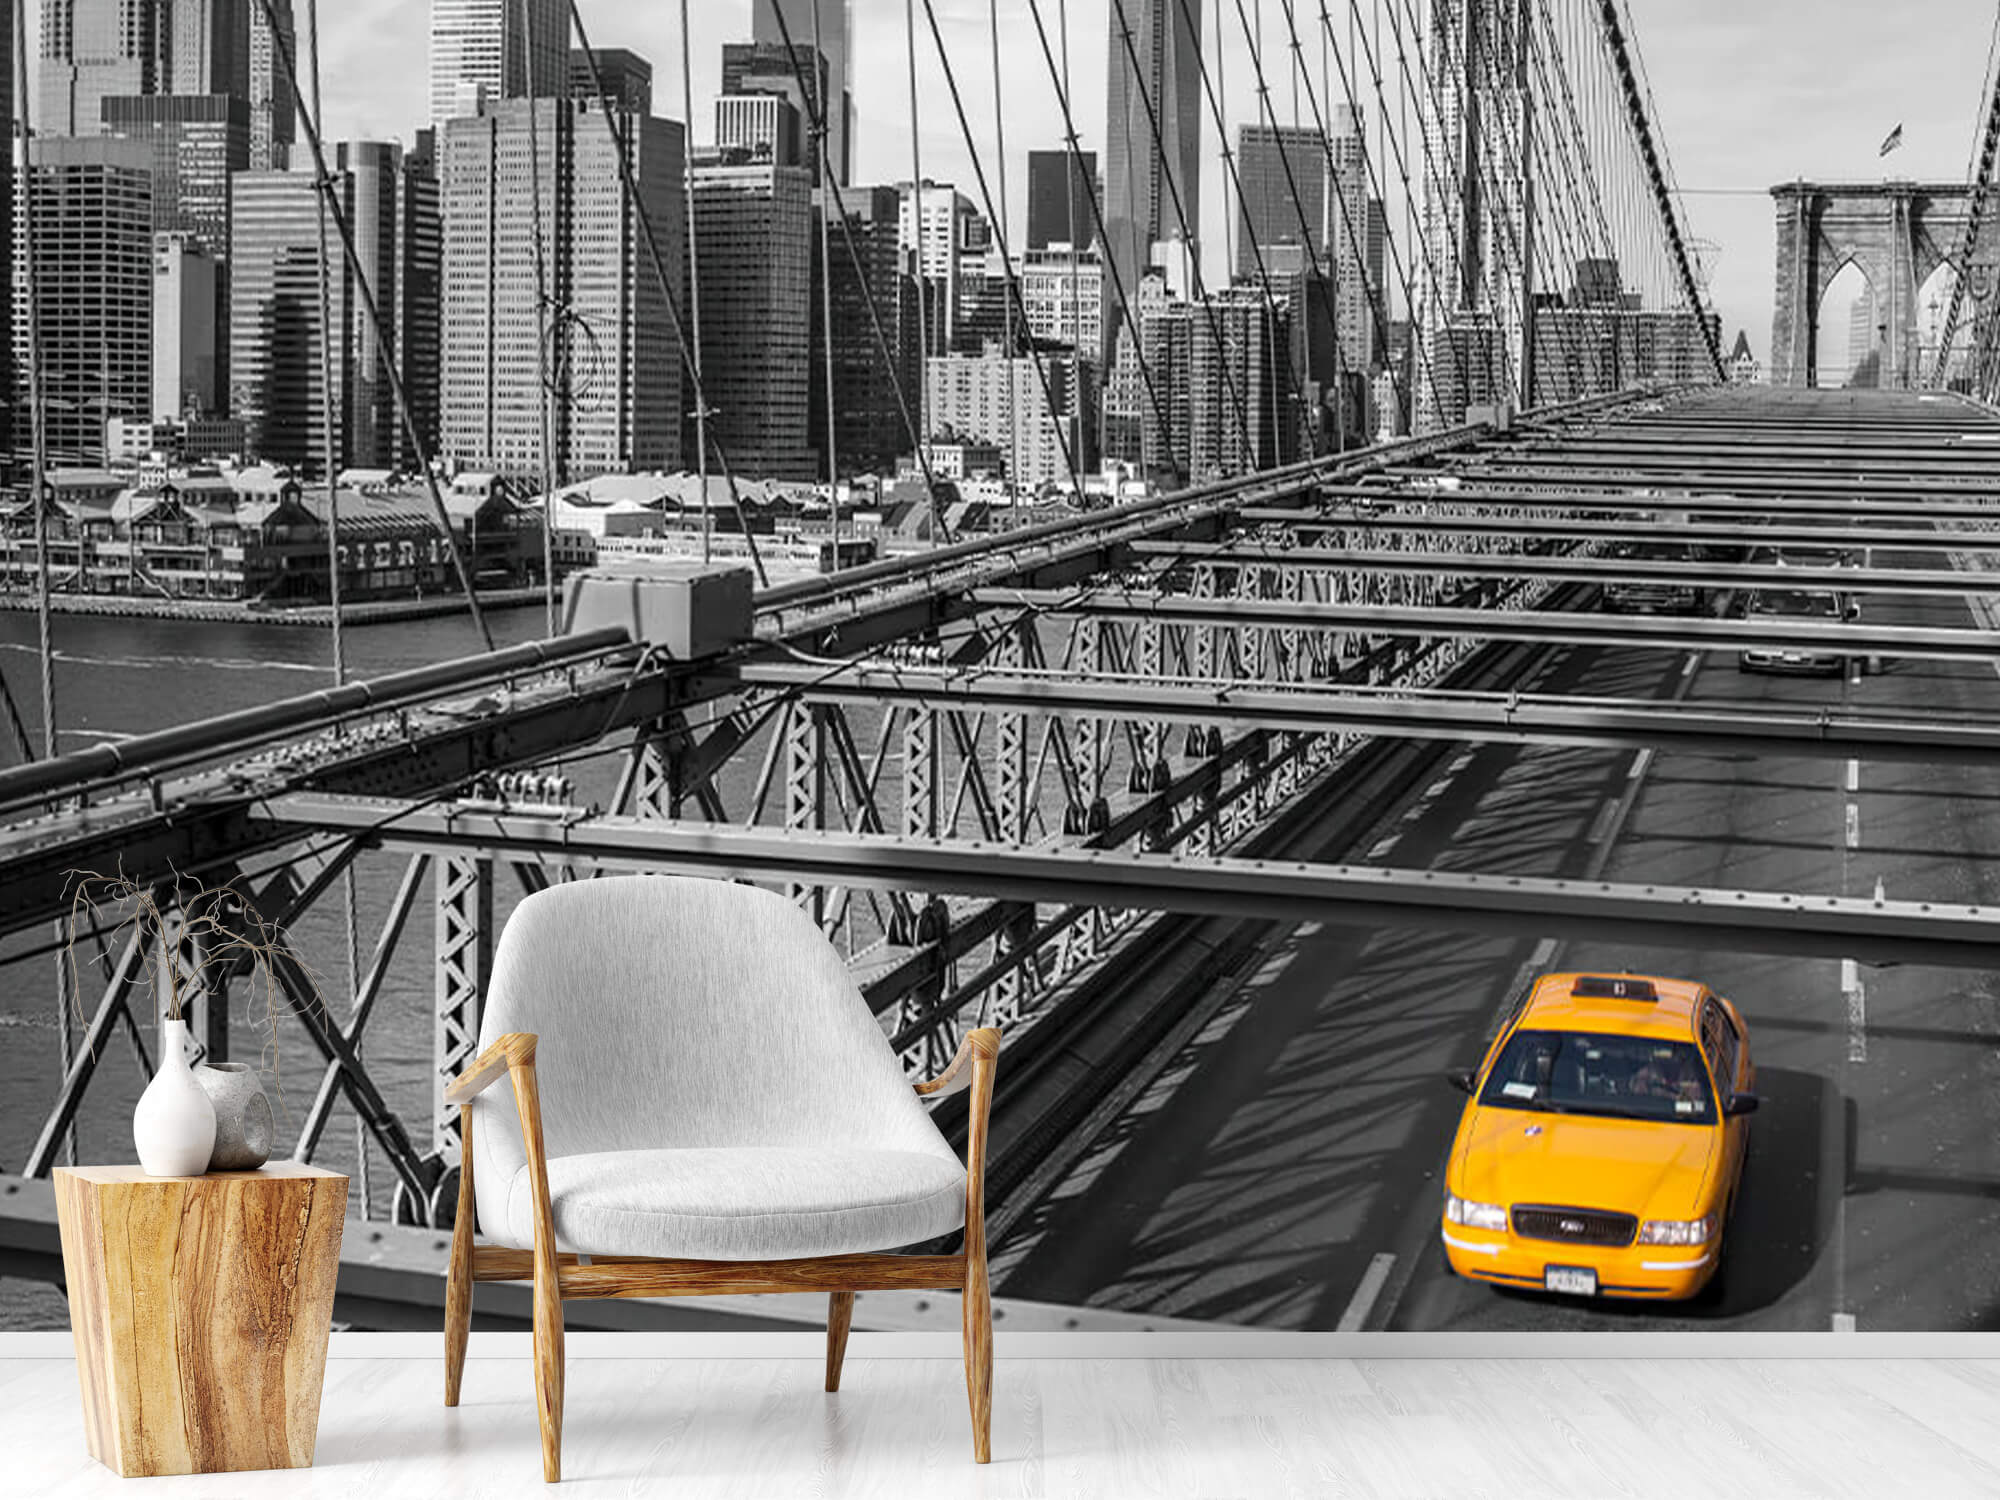  Ein Taxi über die Brooklyn-Brücke 2